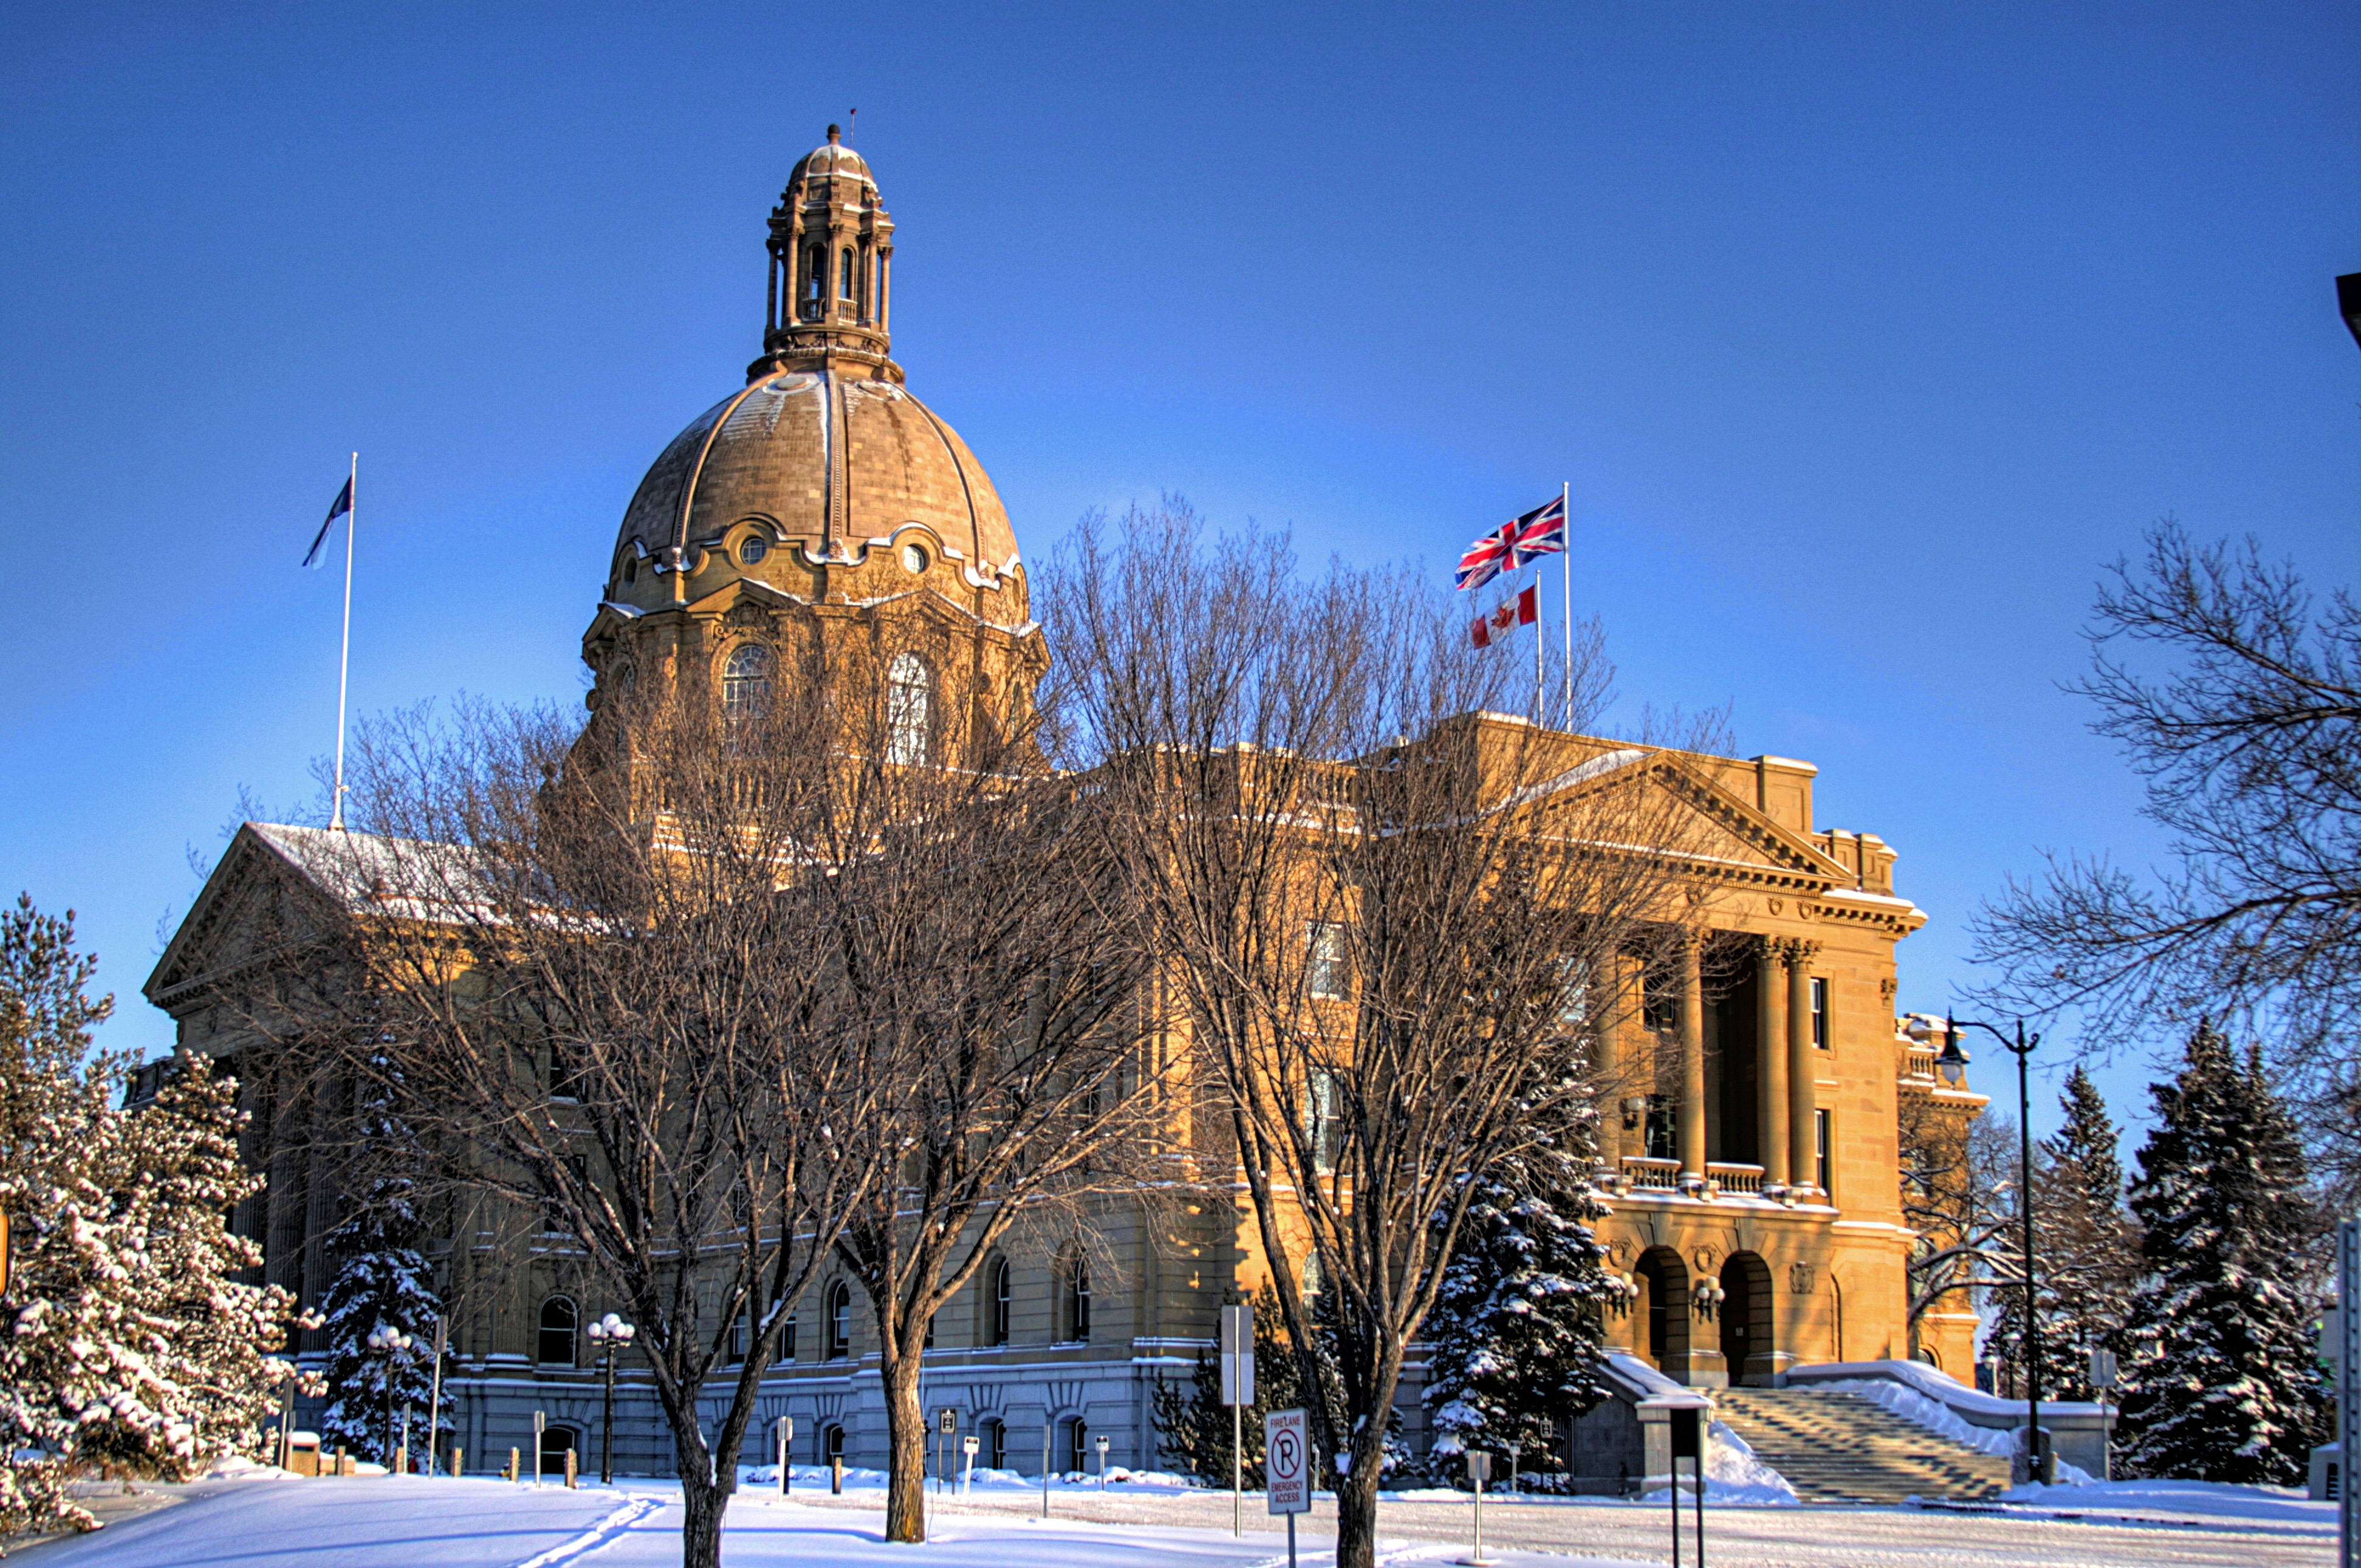 Alberta Provincial Legislature Building, Edmonton image - Free stock photo - Public Domain photo ...